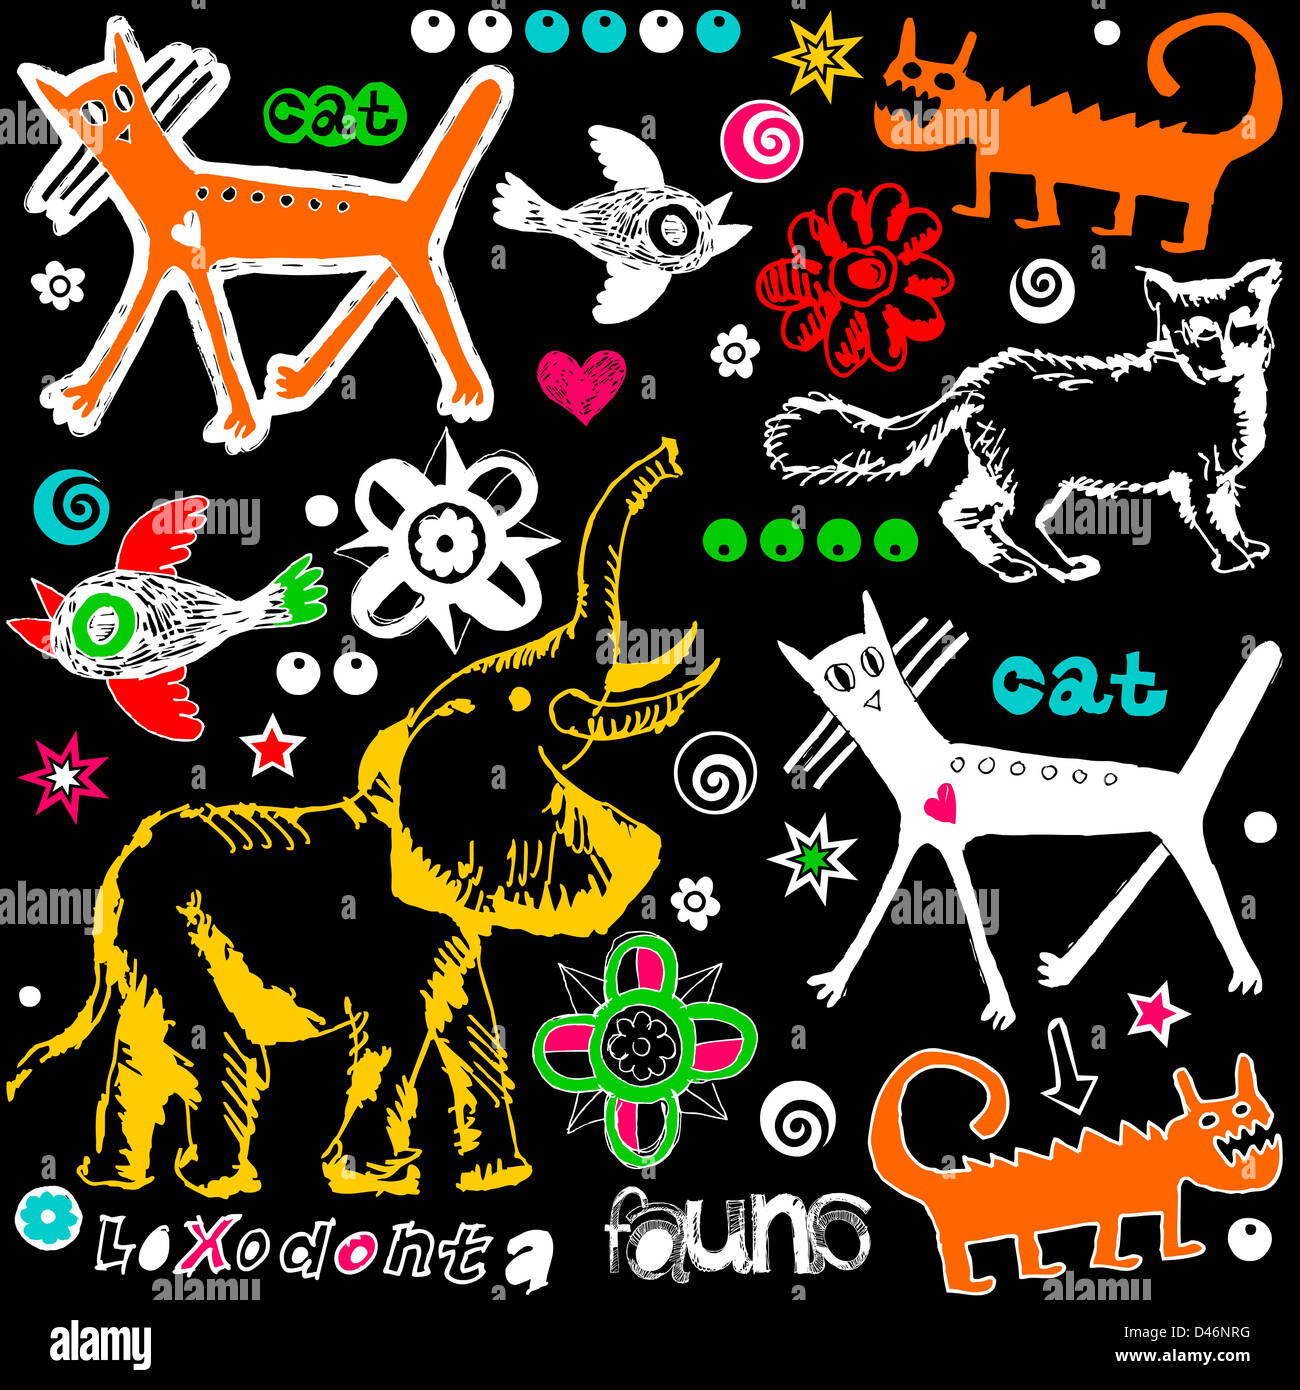 crazy animals, hand drawn design elements on black background Stock Photo